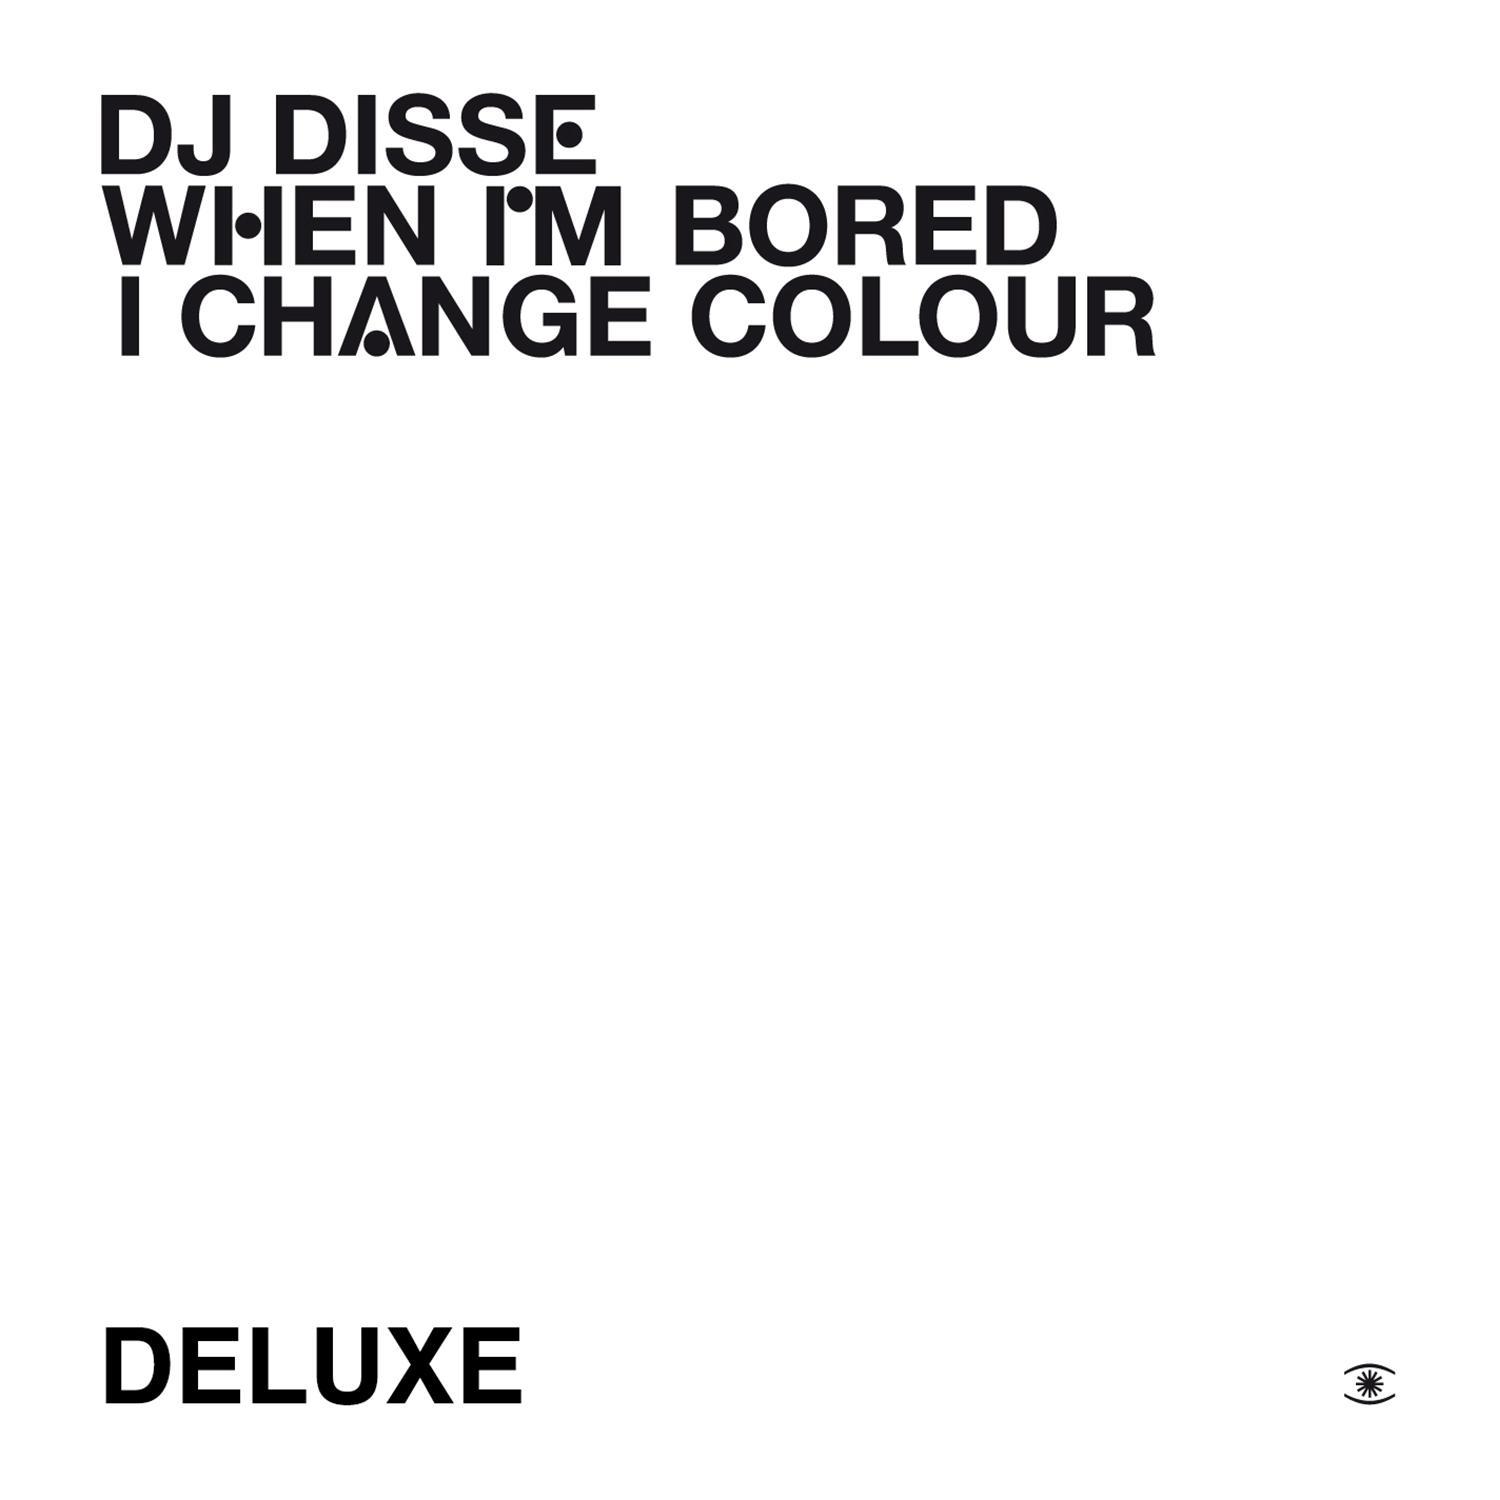 When I'm Bored I Change Colour (Deluxe)专辑